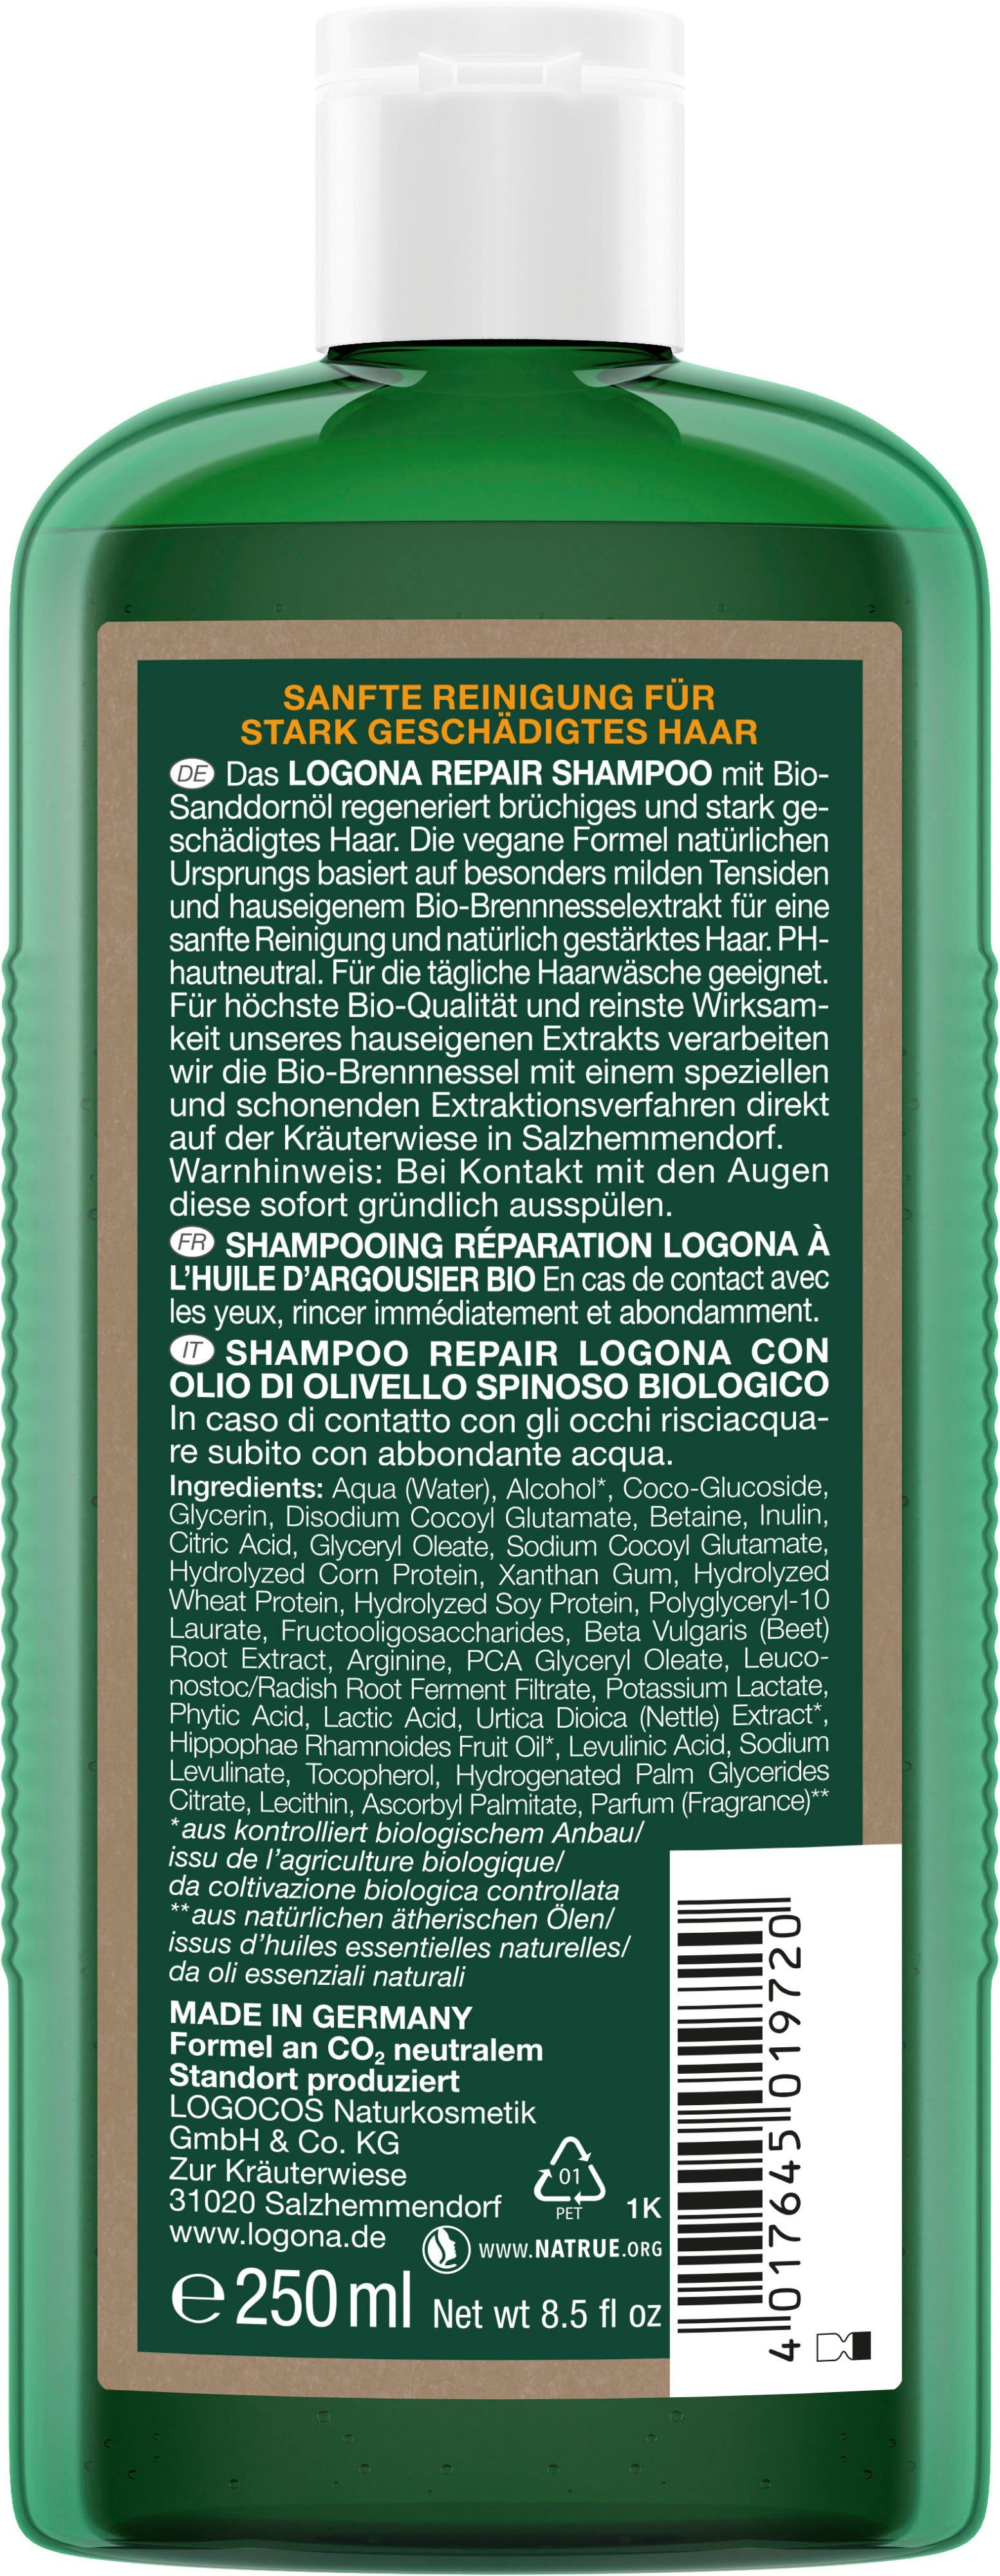 Logona LOGONA Bio-Sanddorn Haarshampoo Repair&Pflege Shampoo